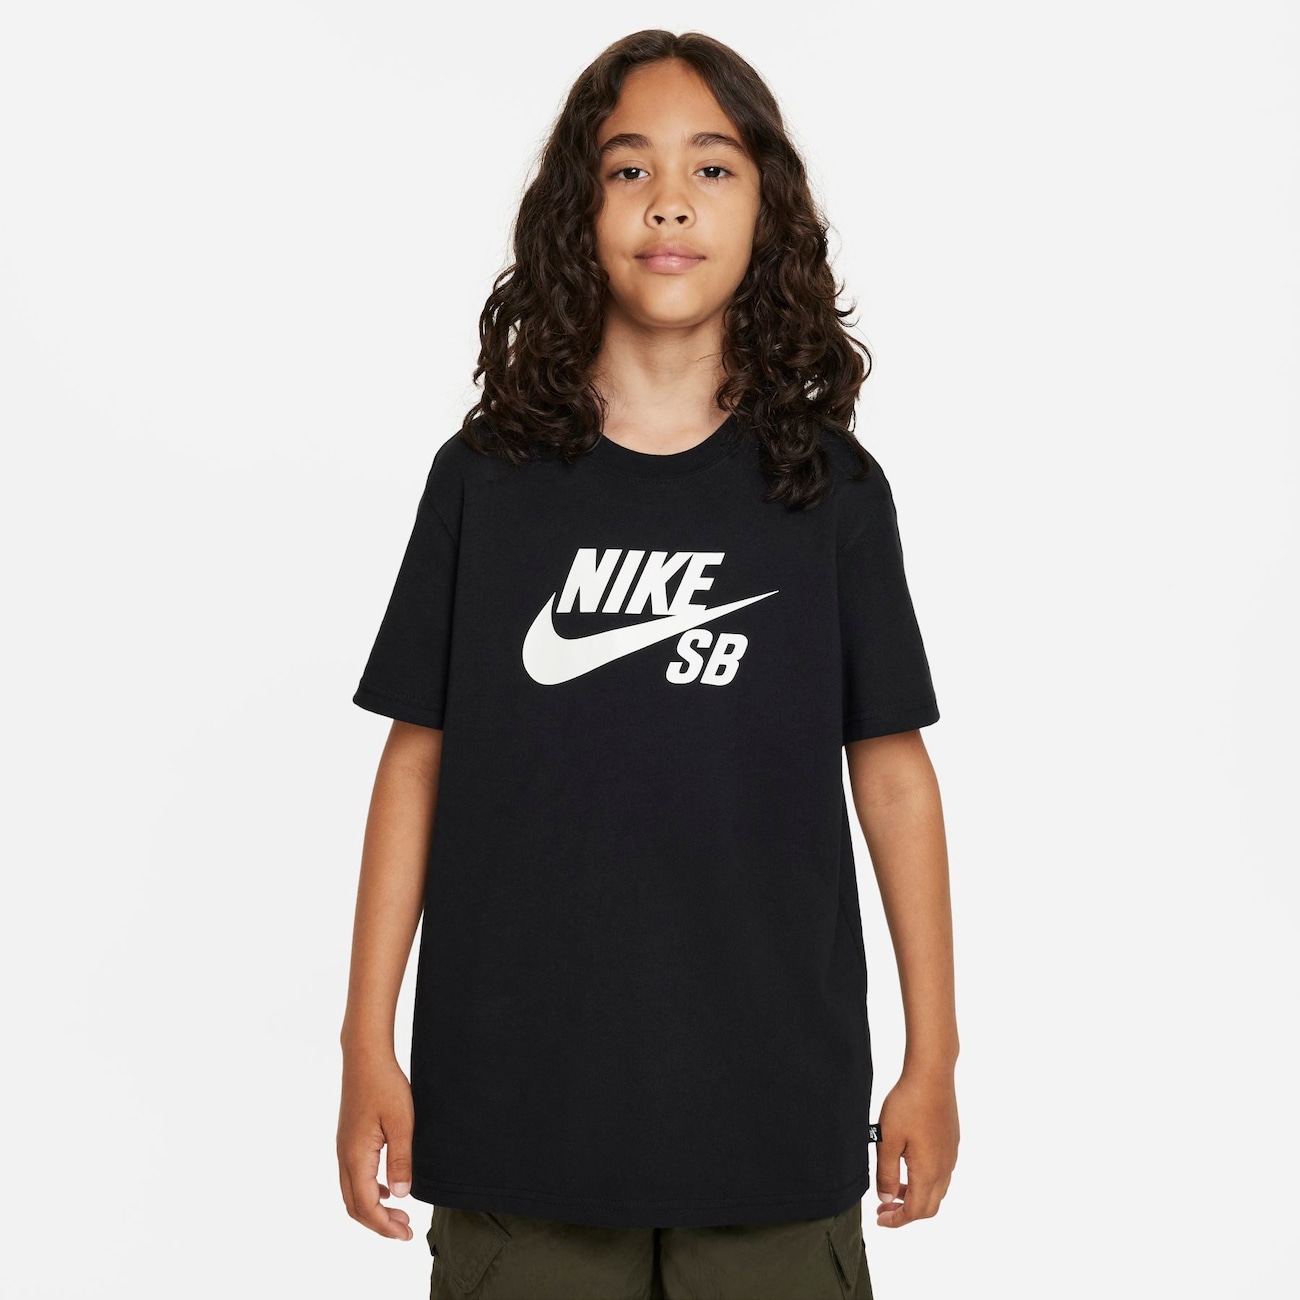 Nike SB Camiseta - Niño/a - Negro